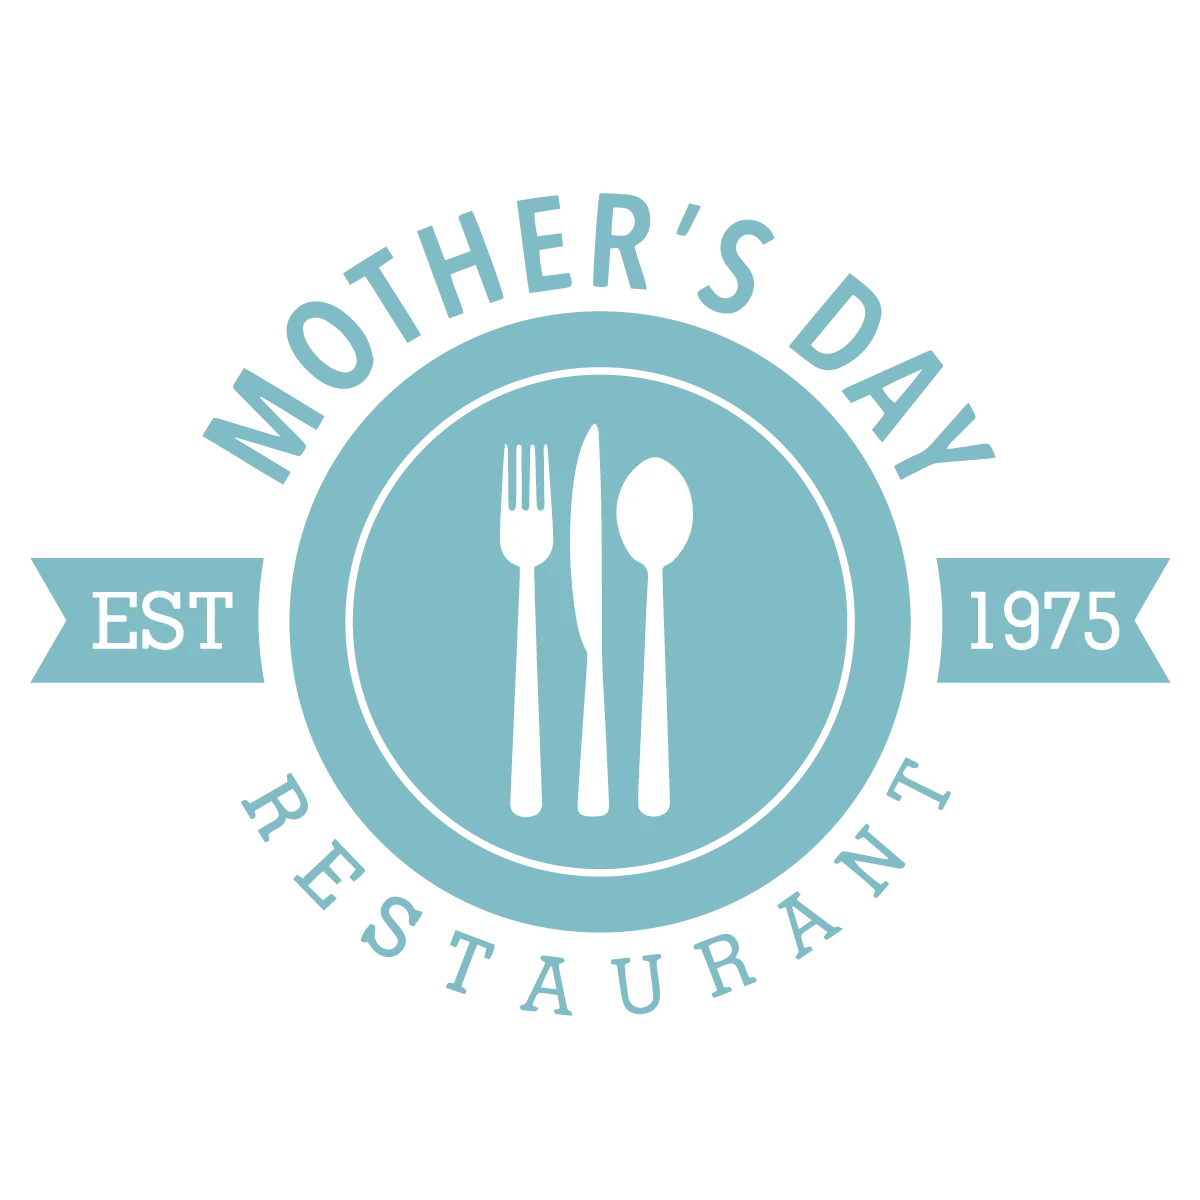 Mother's Day Restaurant